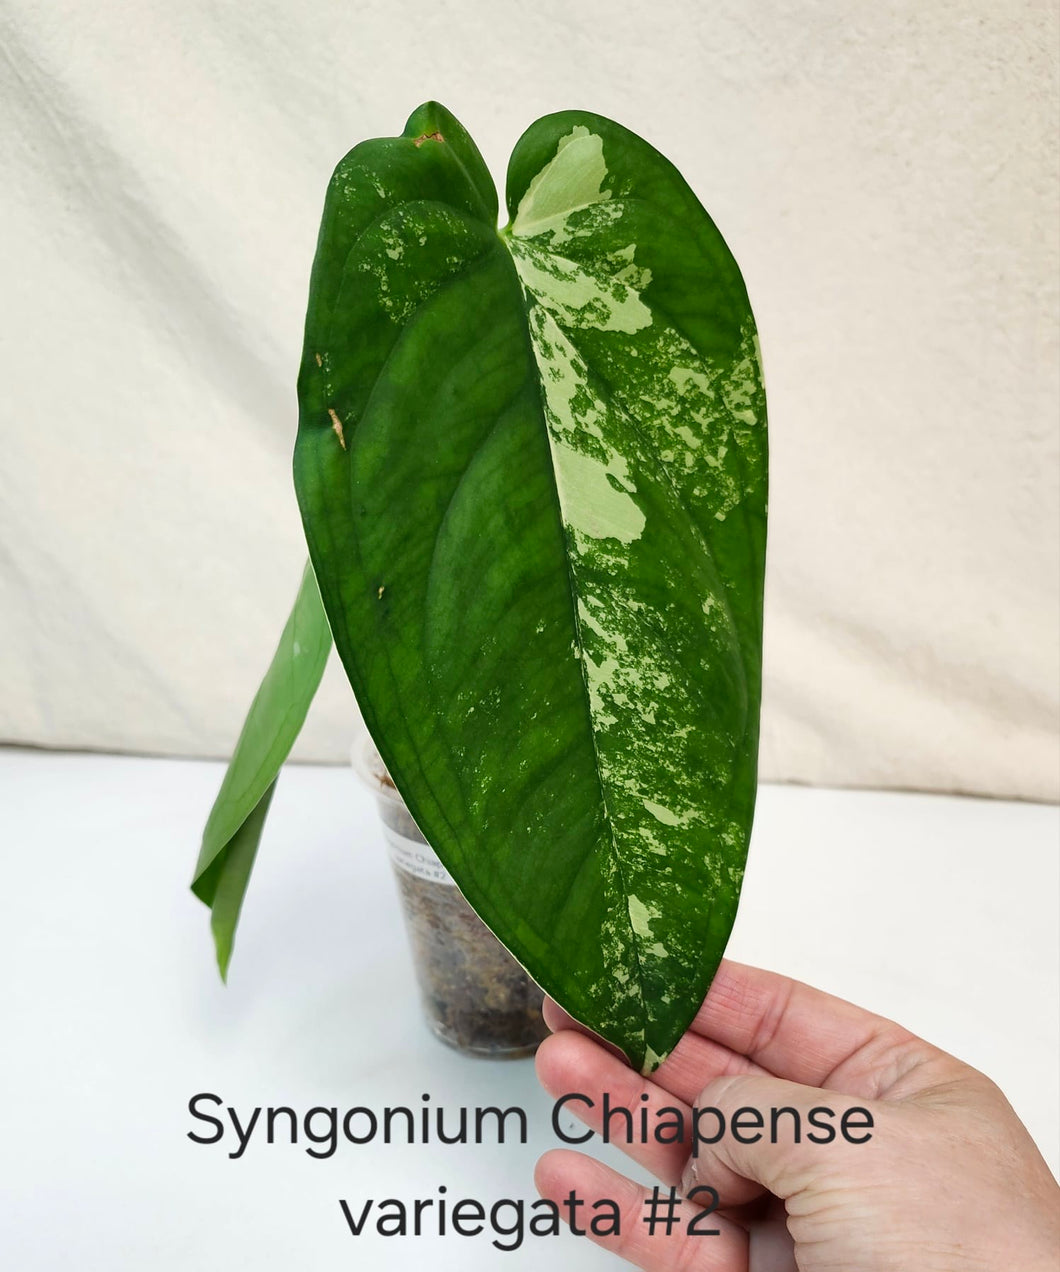 Syngonium chiapense variegata #2